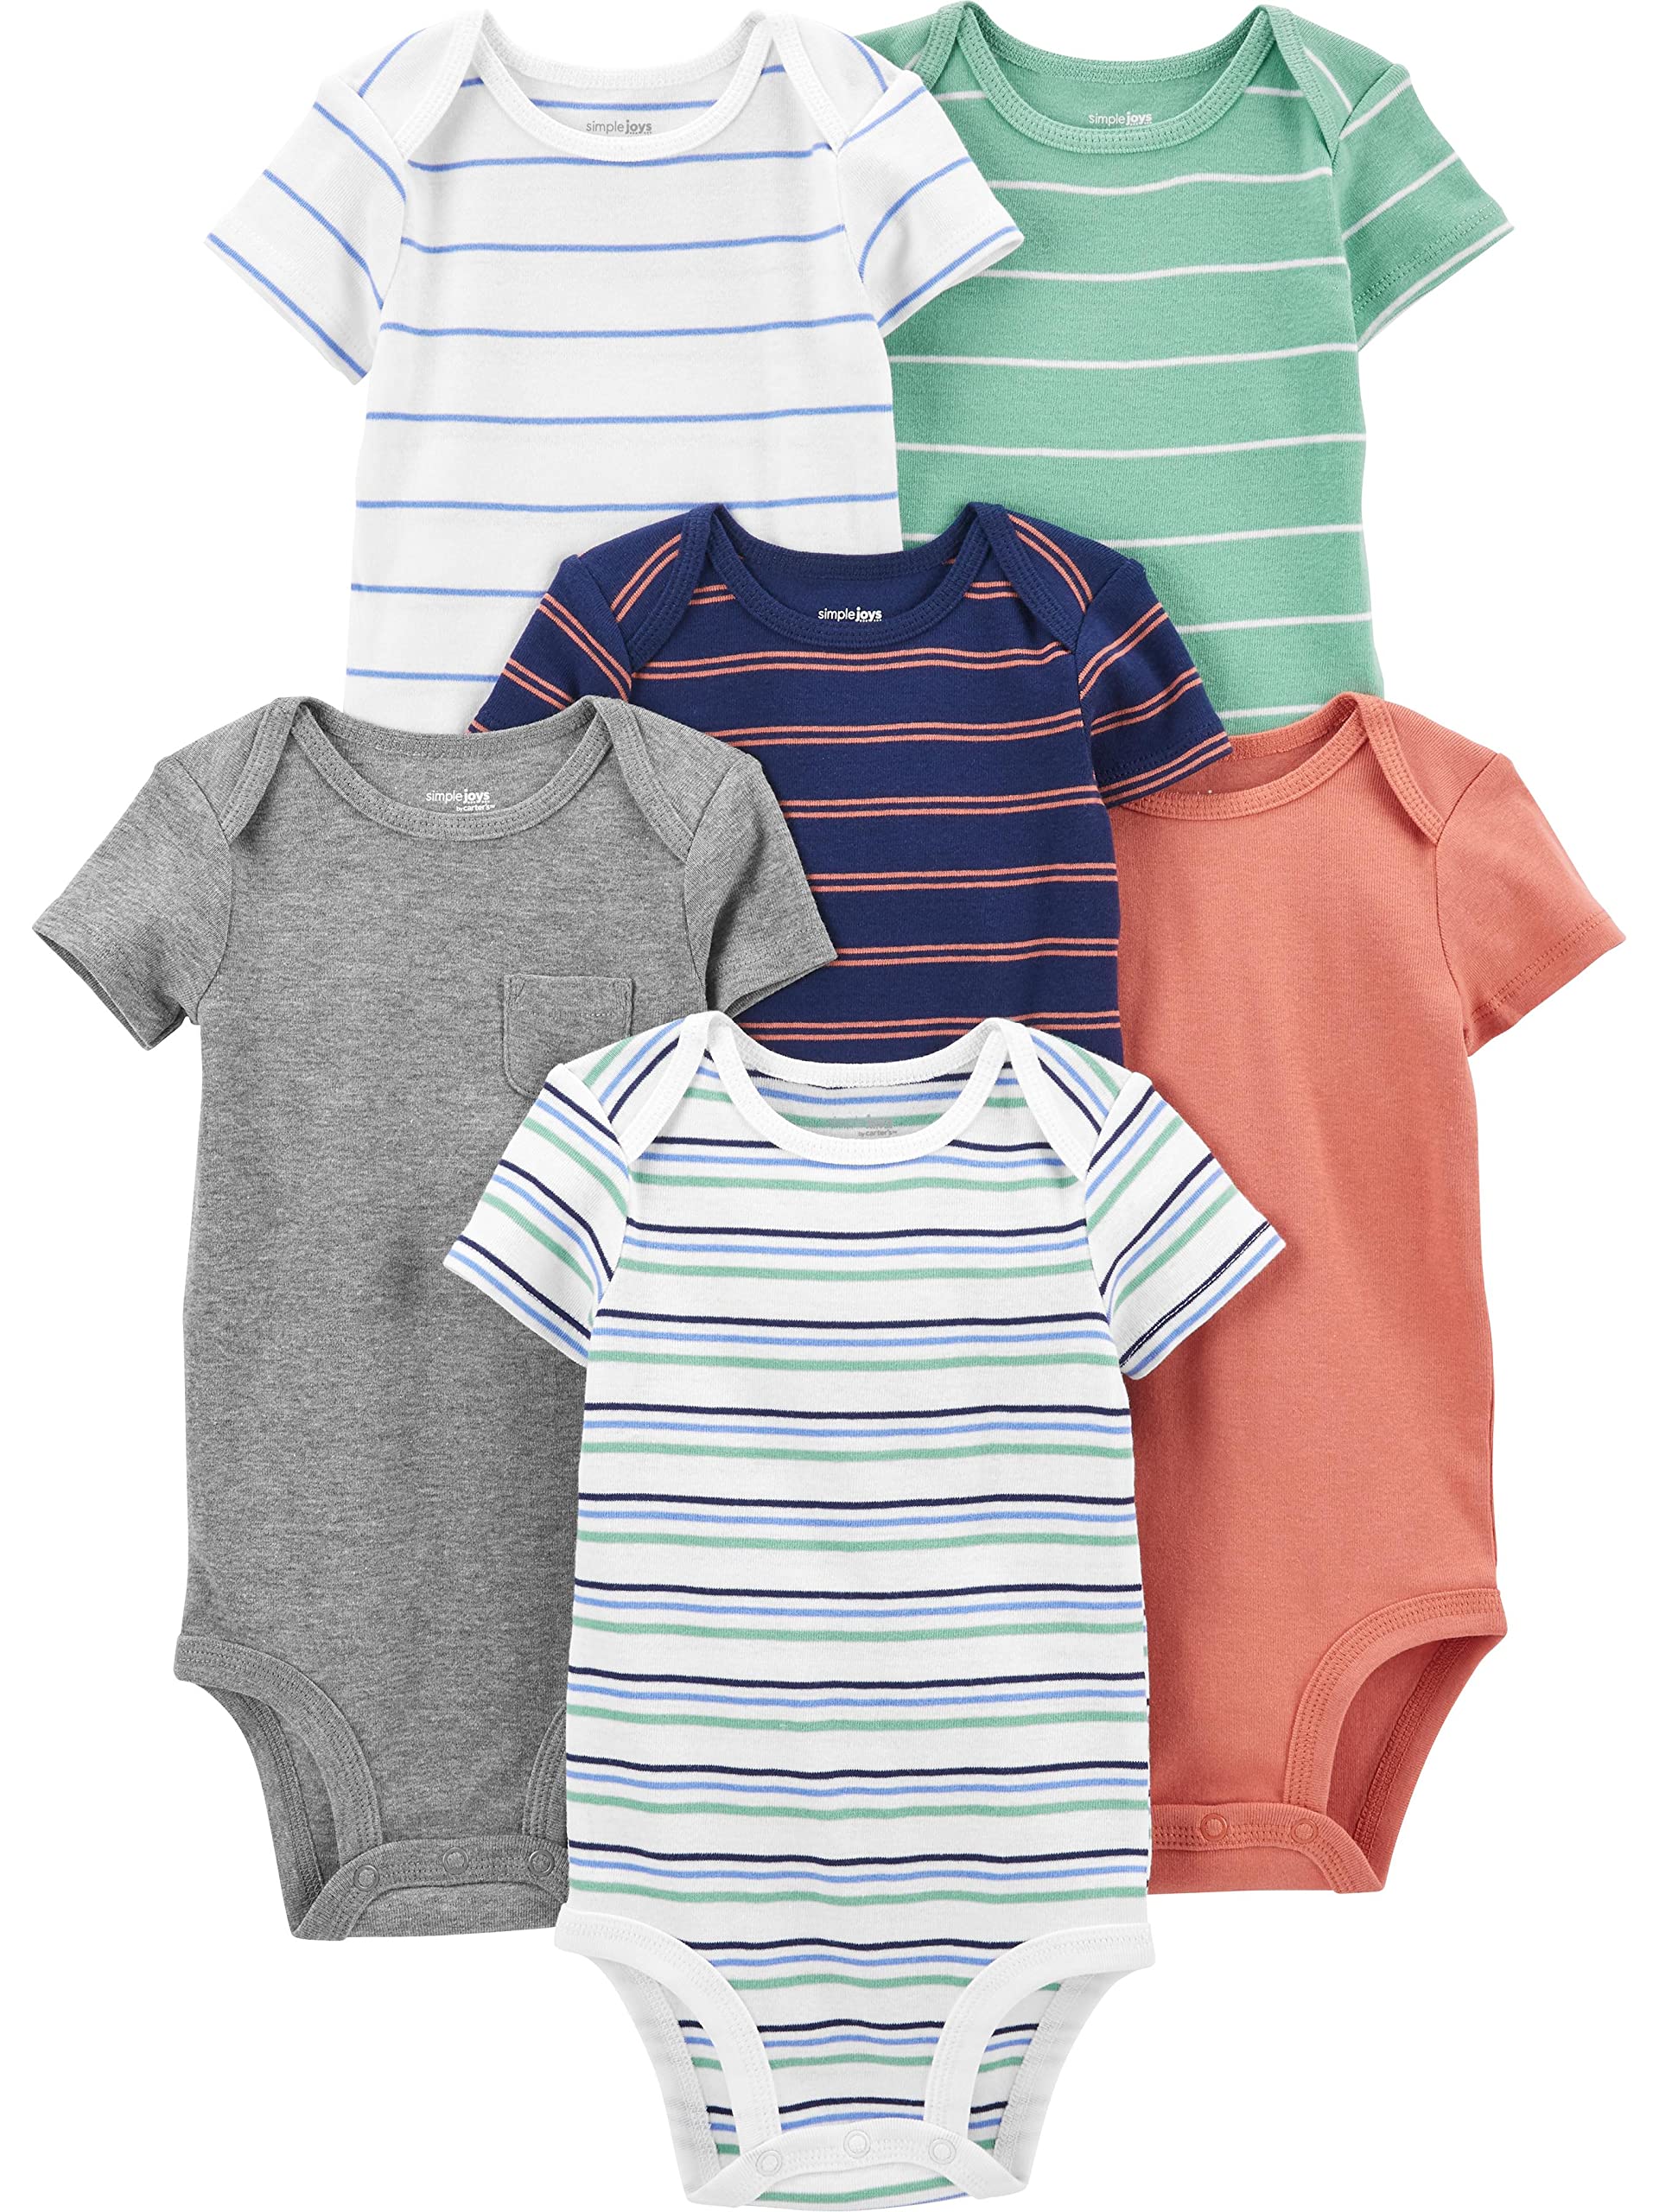 Simple Joys by Carter's Baby Boys' Short-Sleeve Bodysuit, Pack of 6, Multicolor/Stripe, 12 Months